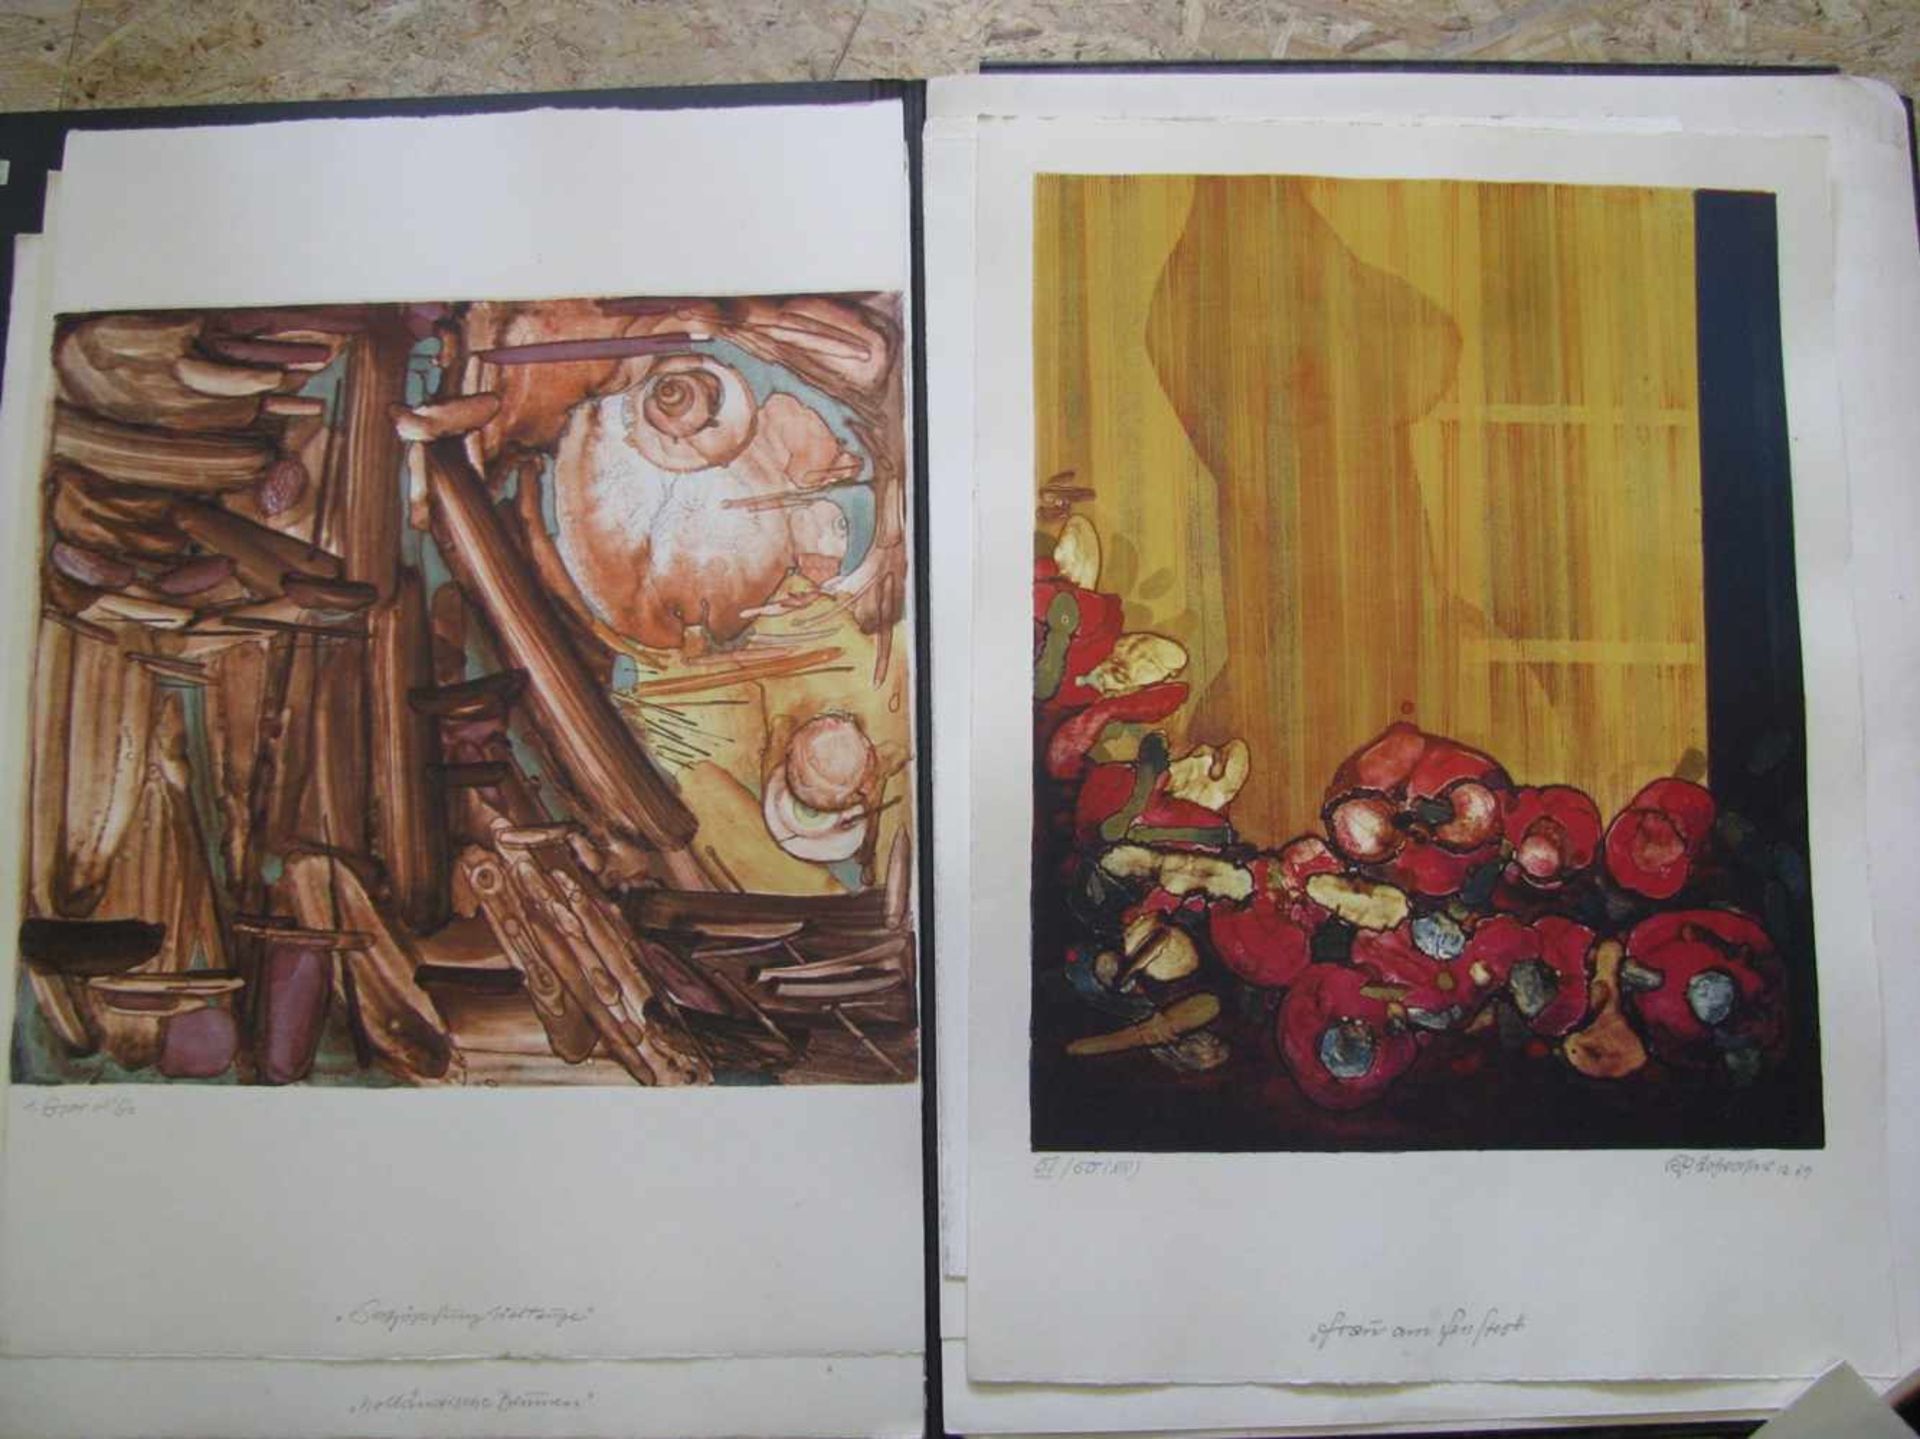 Lohwasser, Kurt Paul, 1922 - 1999, Karlsbad, Maler und Grafiker, Konvolut diverser Grafiken. - Image 2 of 5